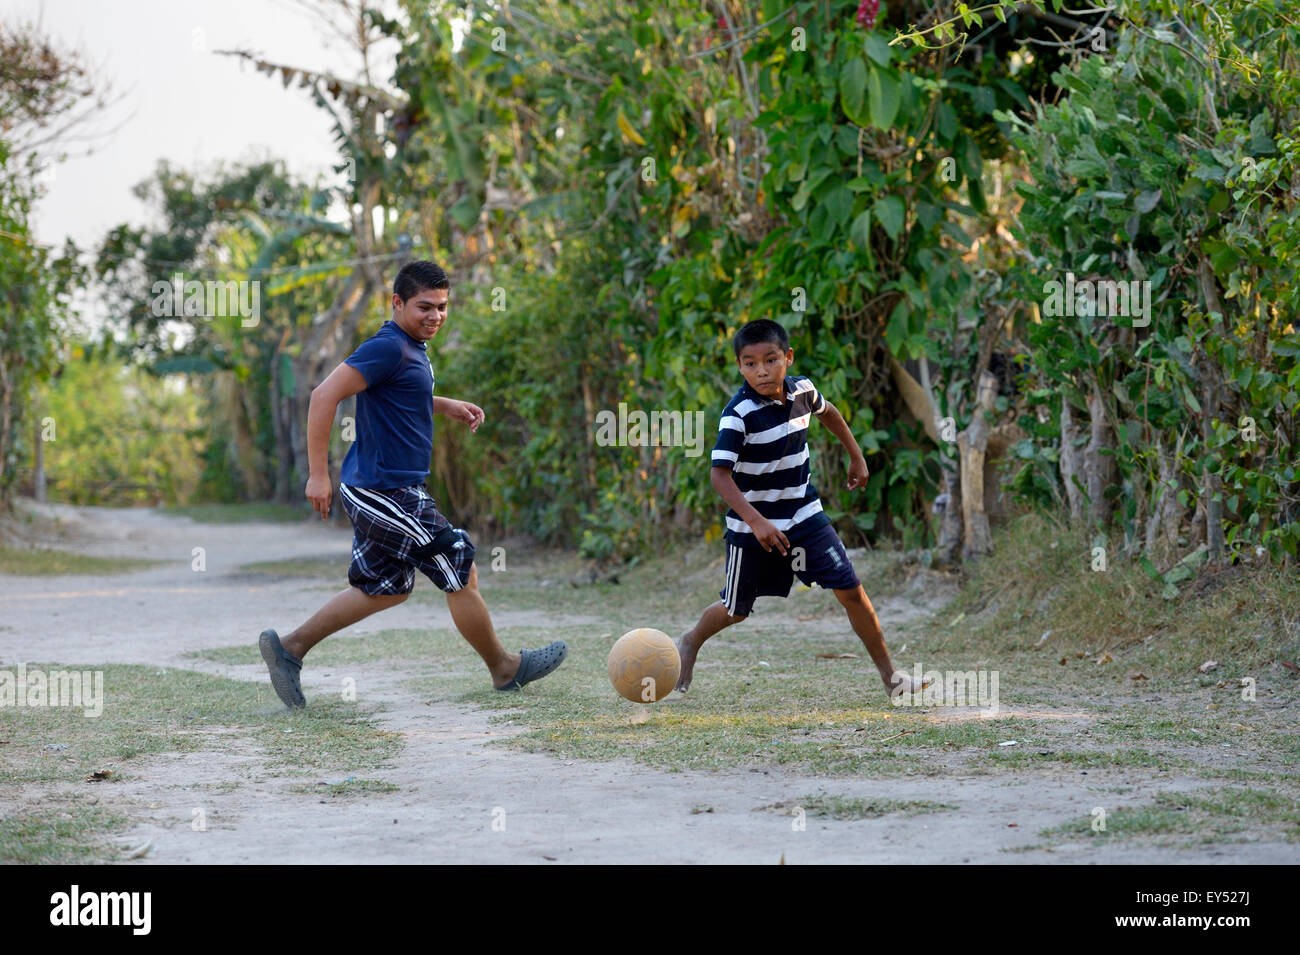 Les adolescents jouent au football sur un terrain de football, des bidonvilles Colonia Monseñor Romero, District Itália, San Salvador, El Salvador Banque D'Images